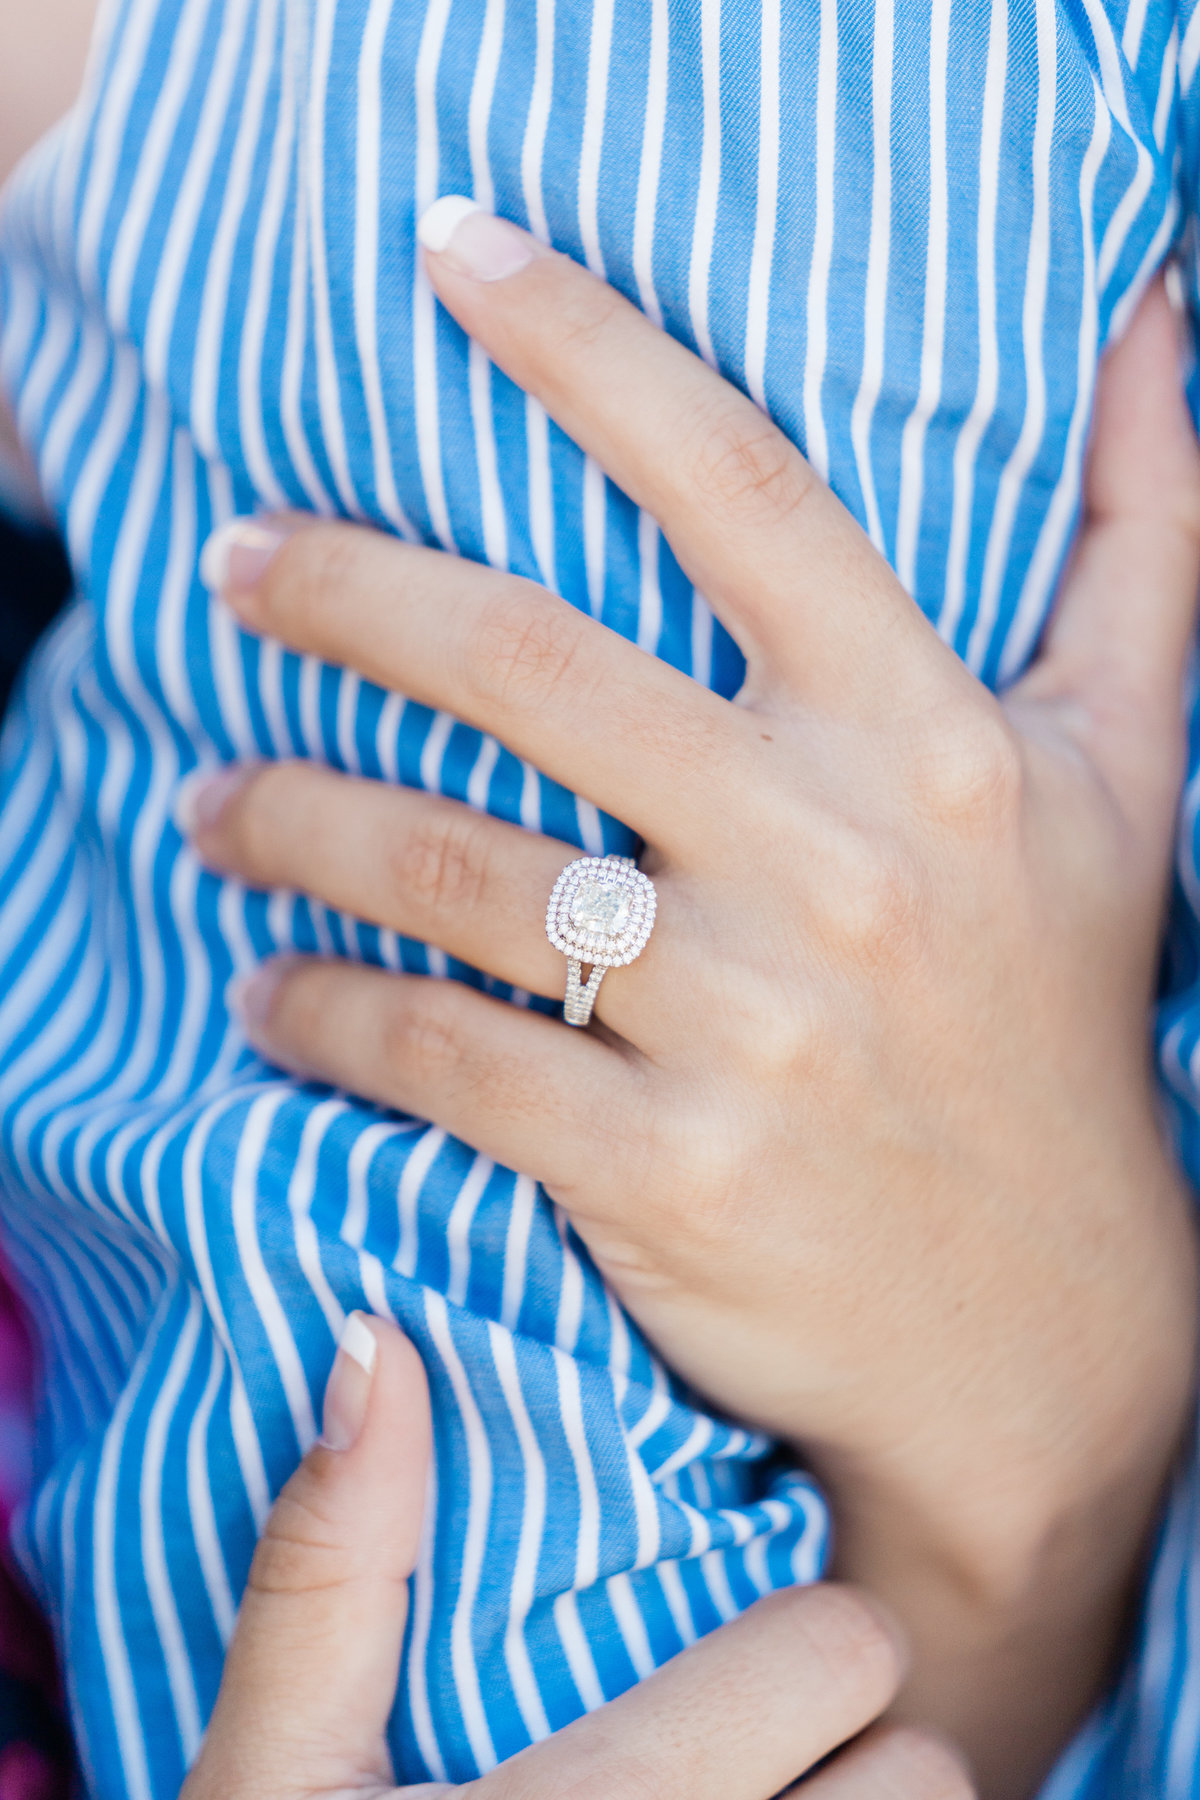 Woman wearing square diamond ring